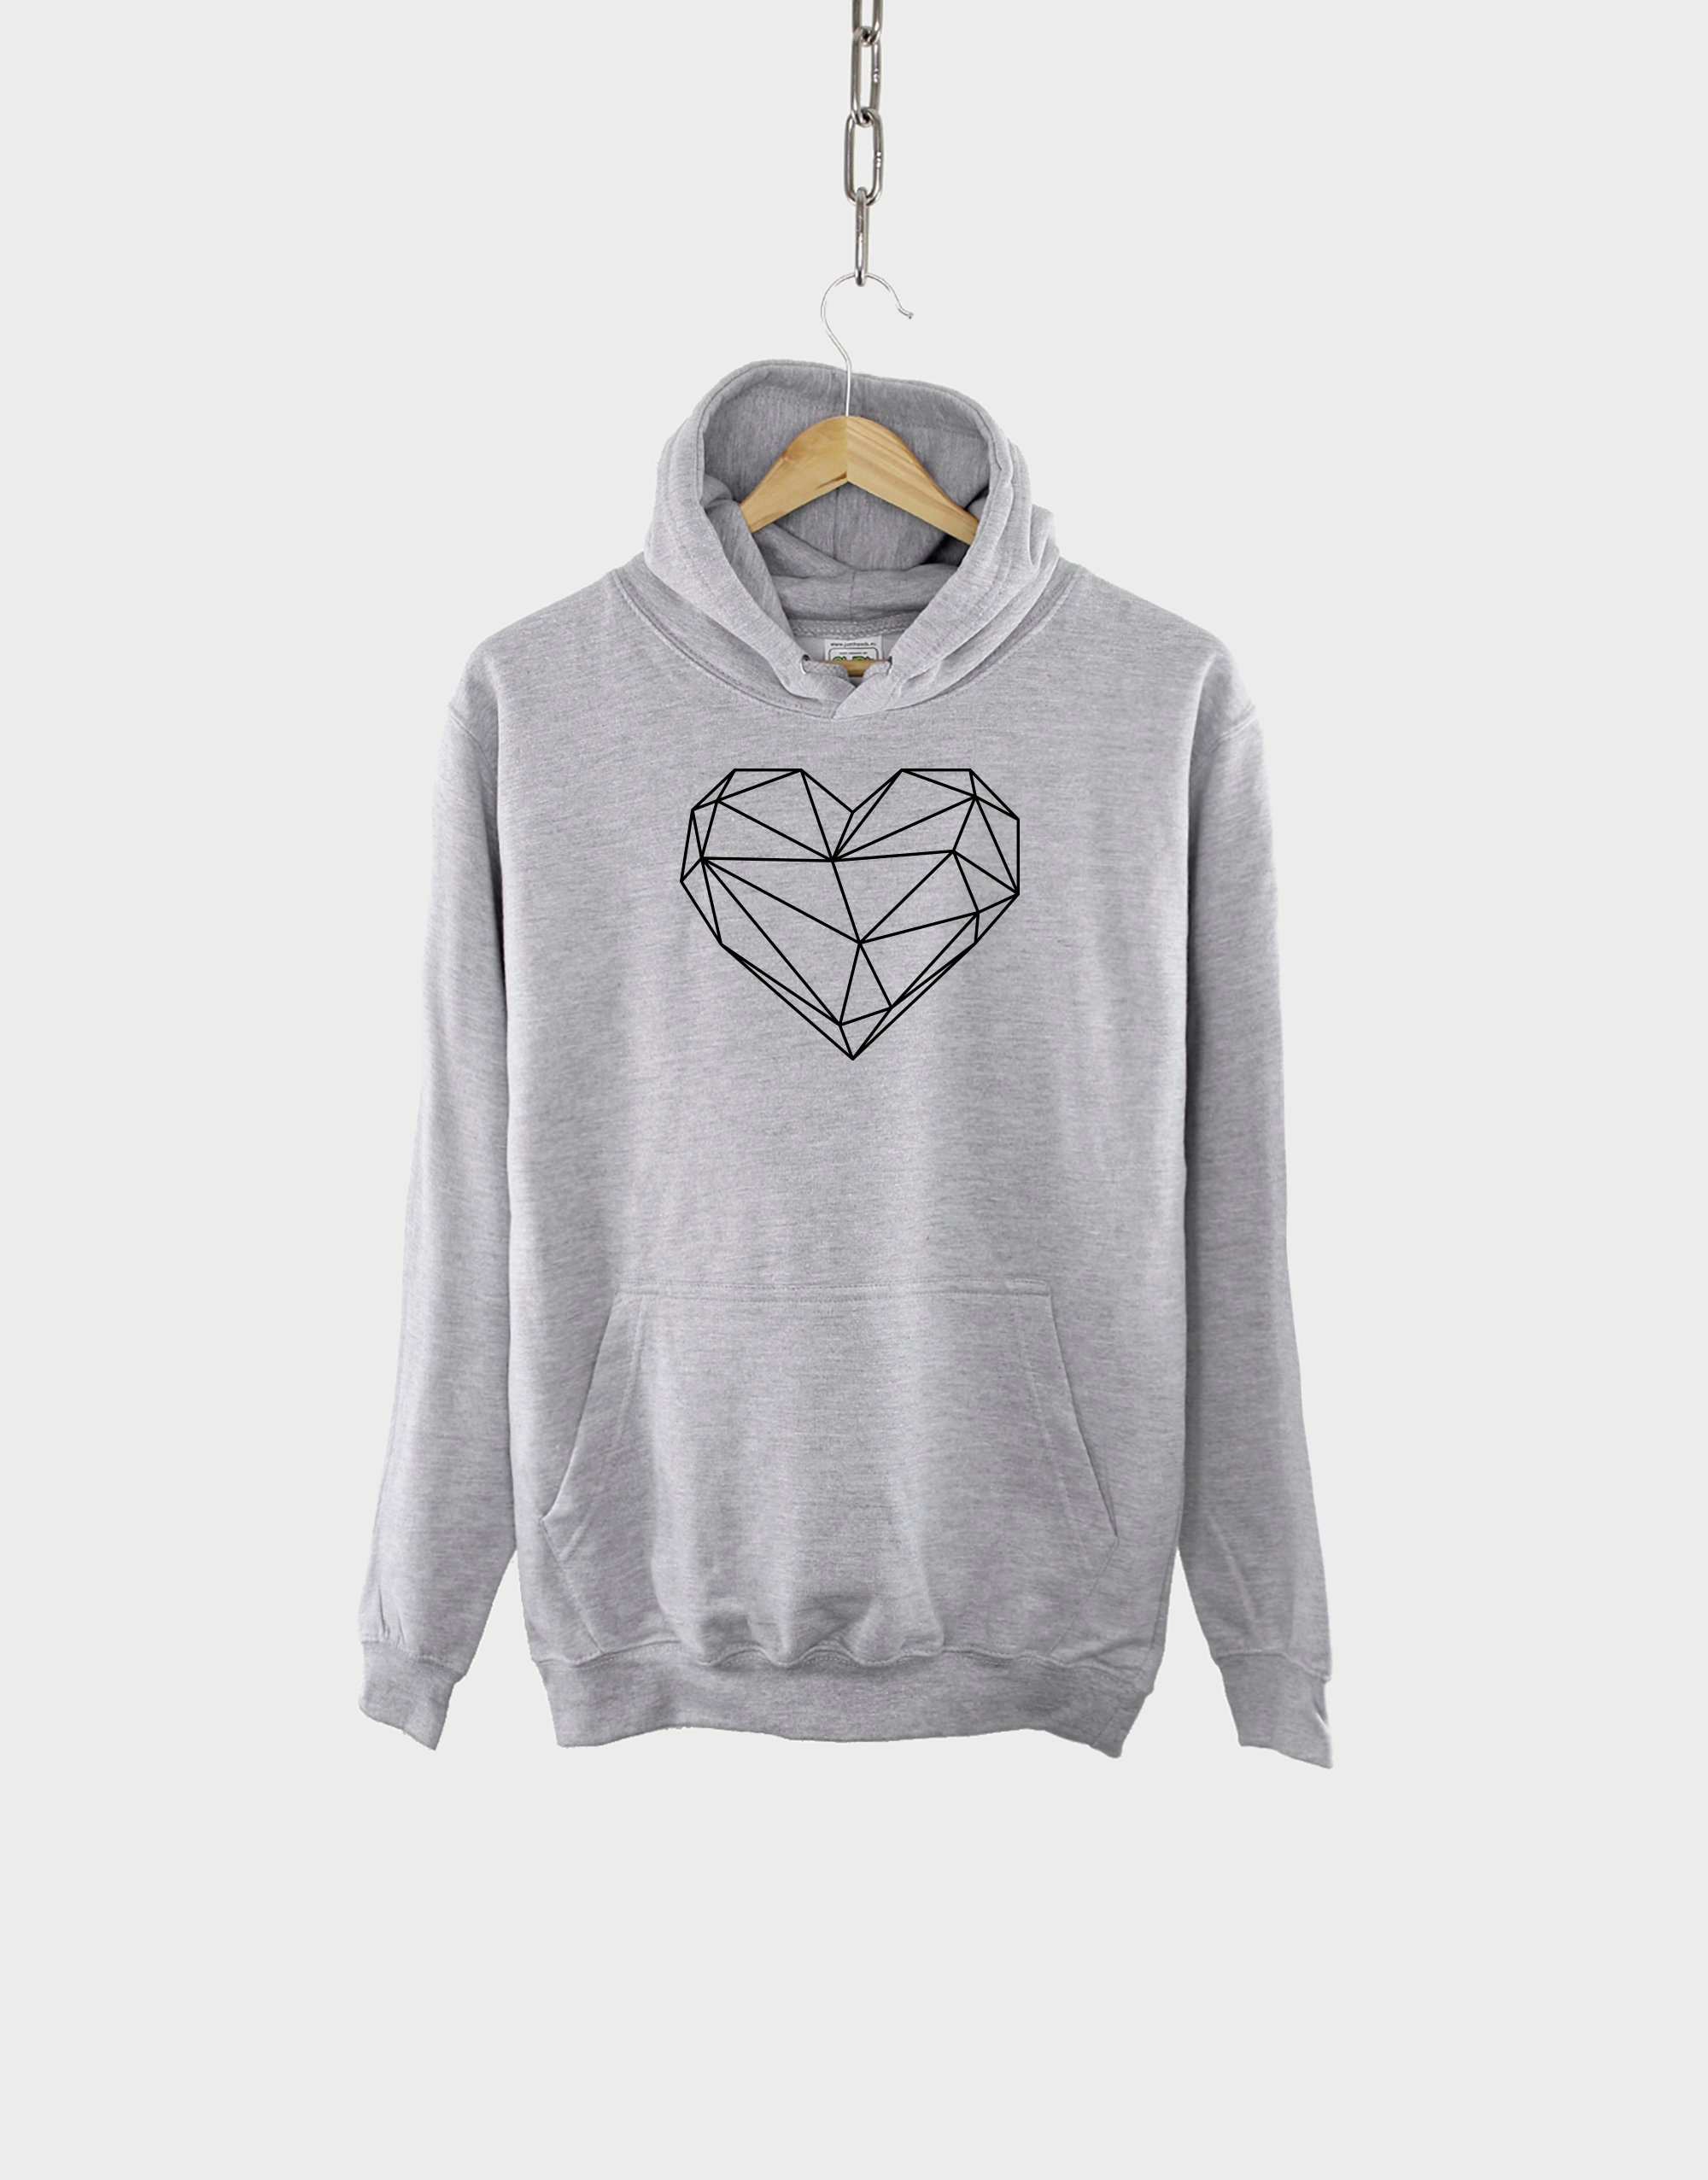 Buy Geometric Heart Symbol Hoodie Good Vibes Abstract Love Shape Sweatshirt  Online in India - Etsy